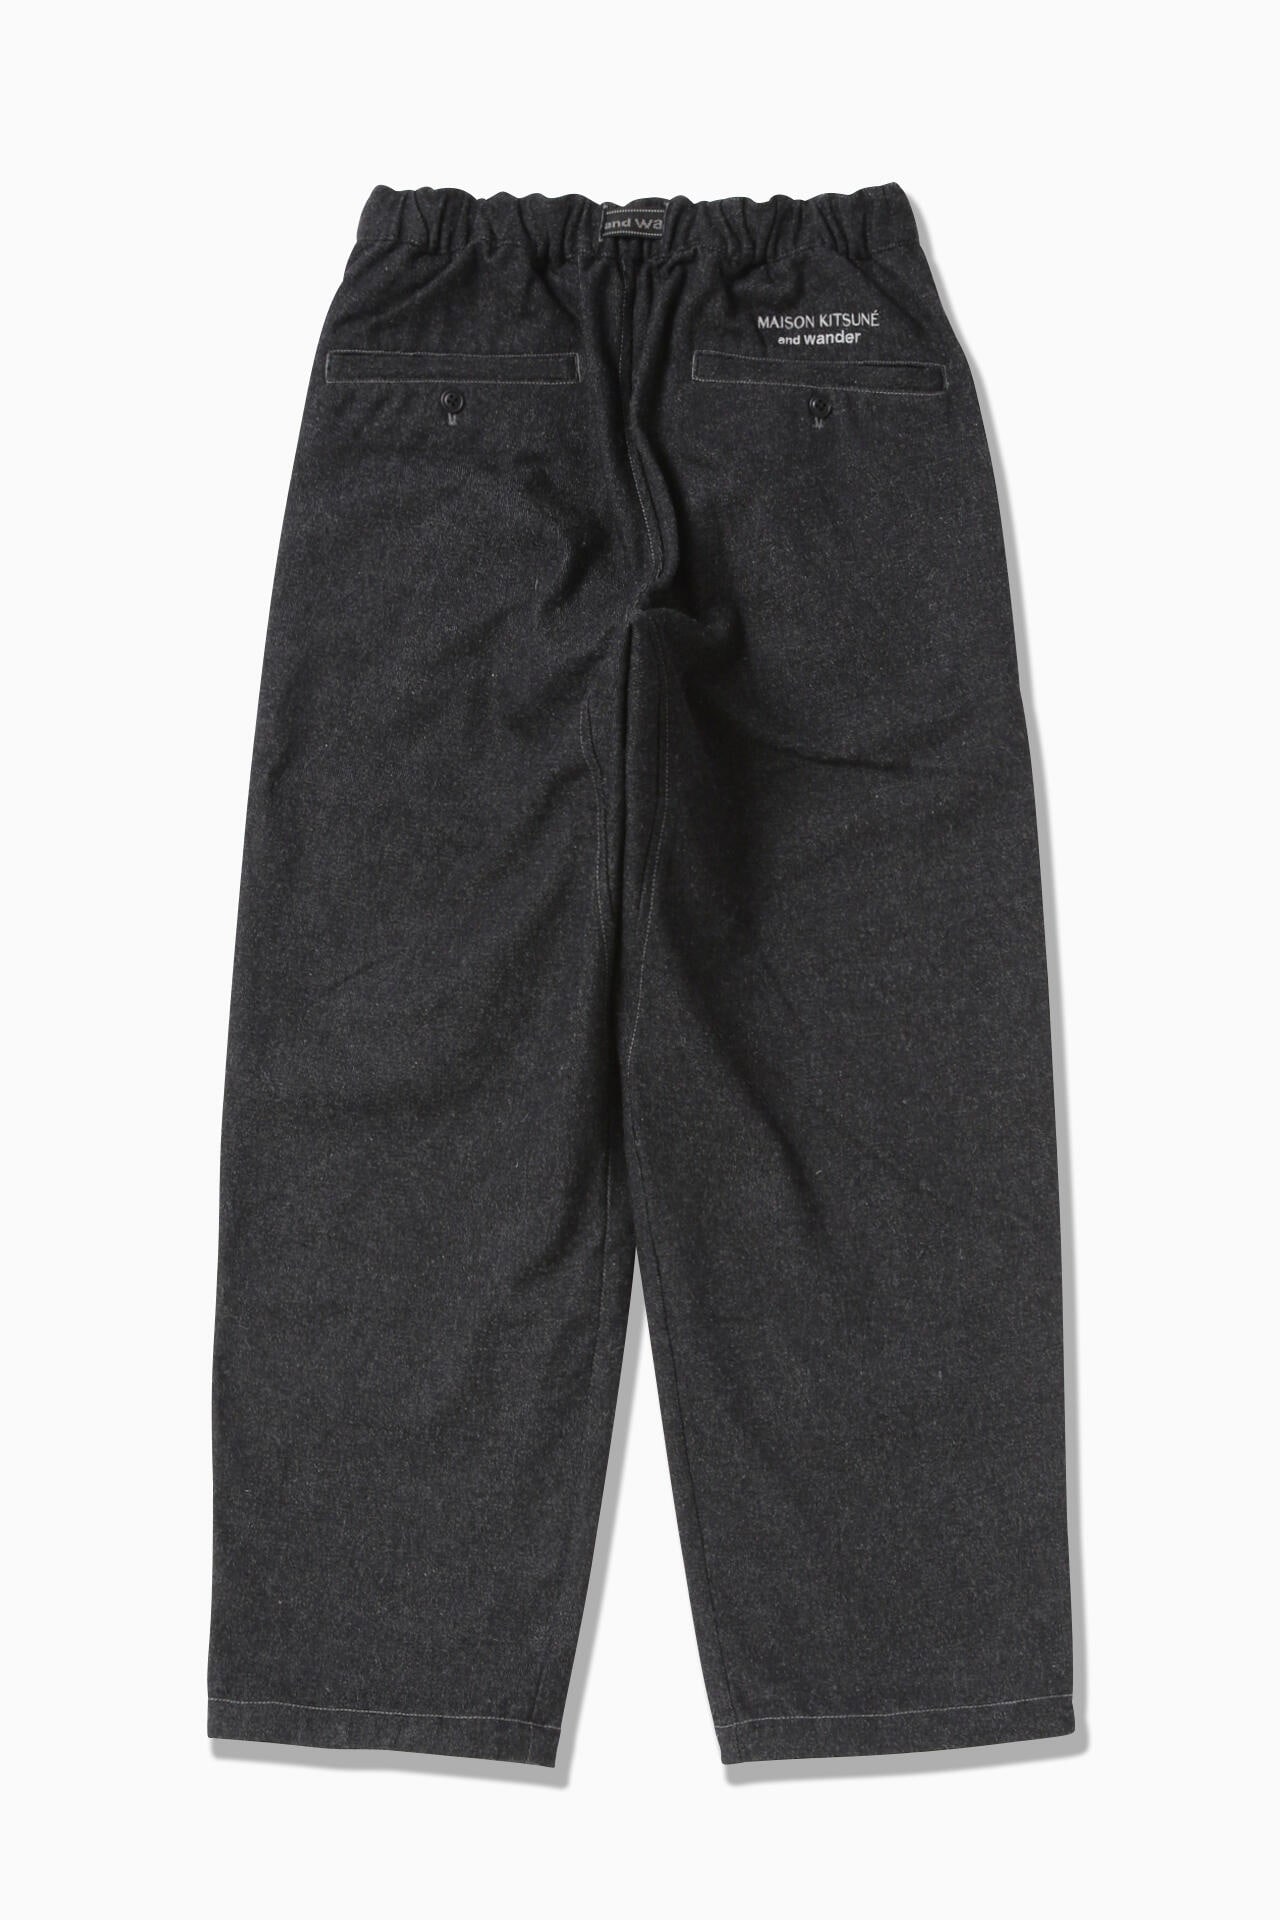 MAISON KITSUNE shorts (navy)40 - パンツ